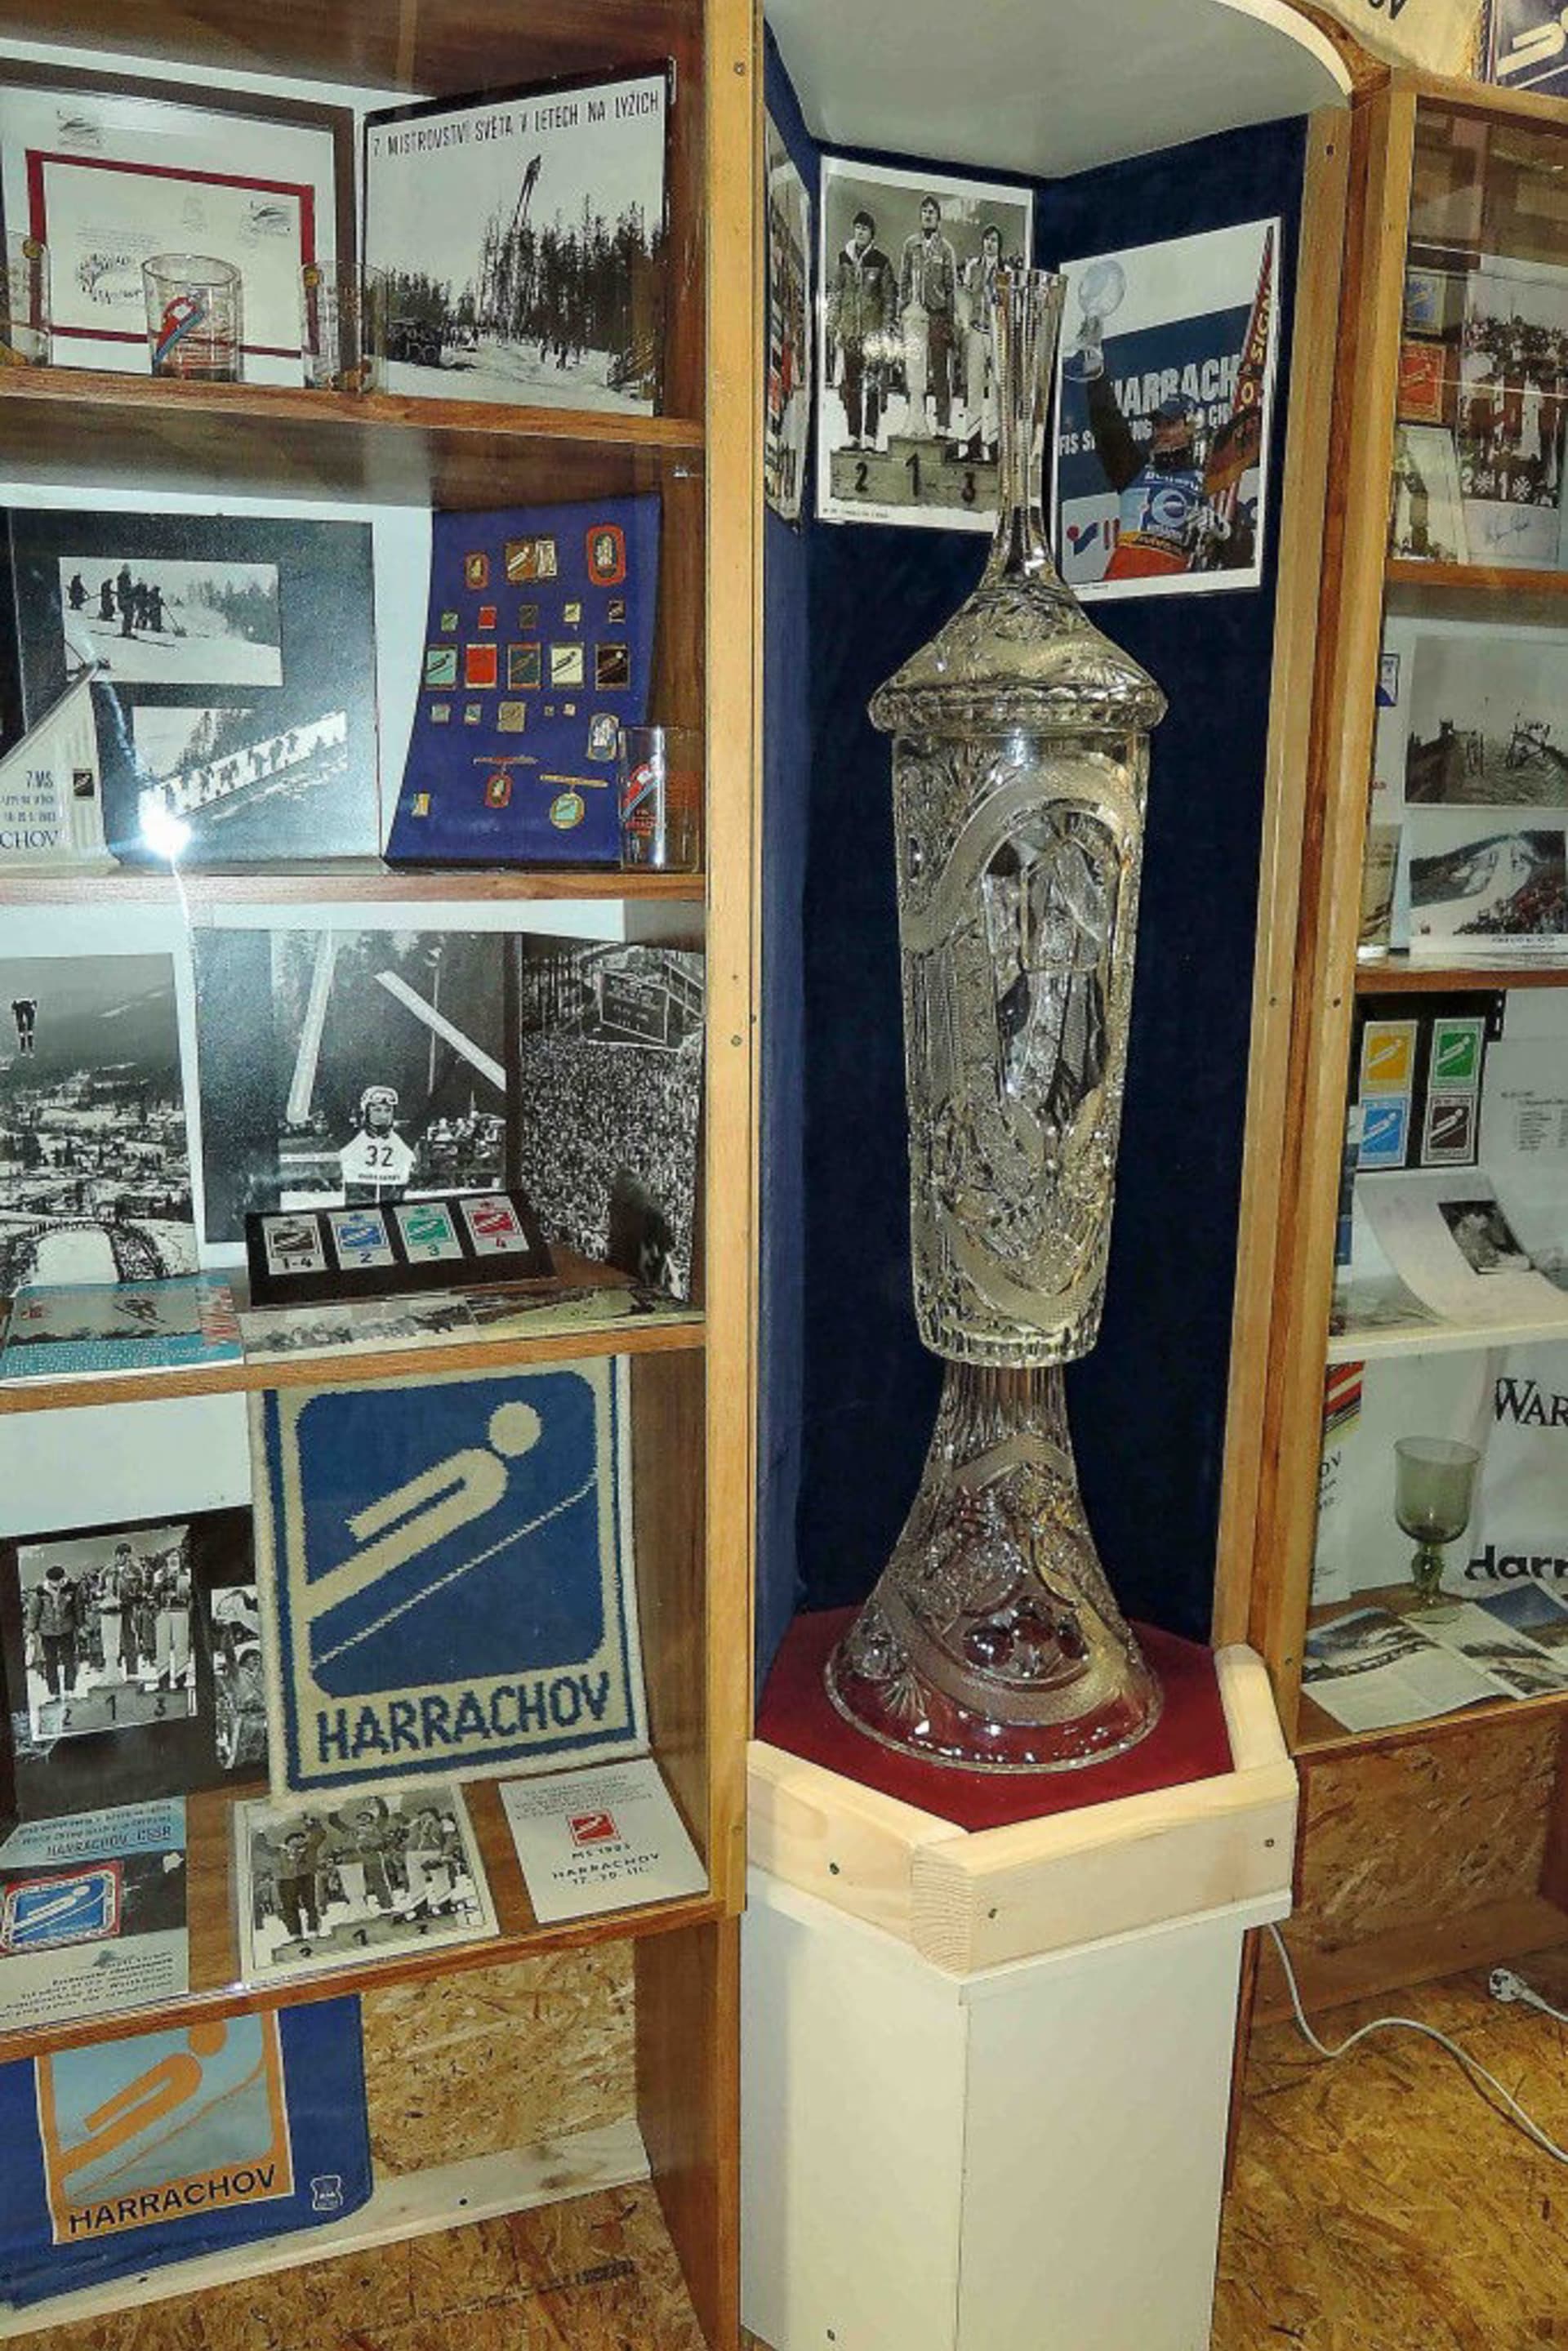 Ski muzeum v Harrachově